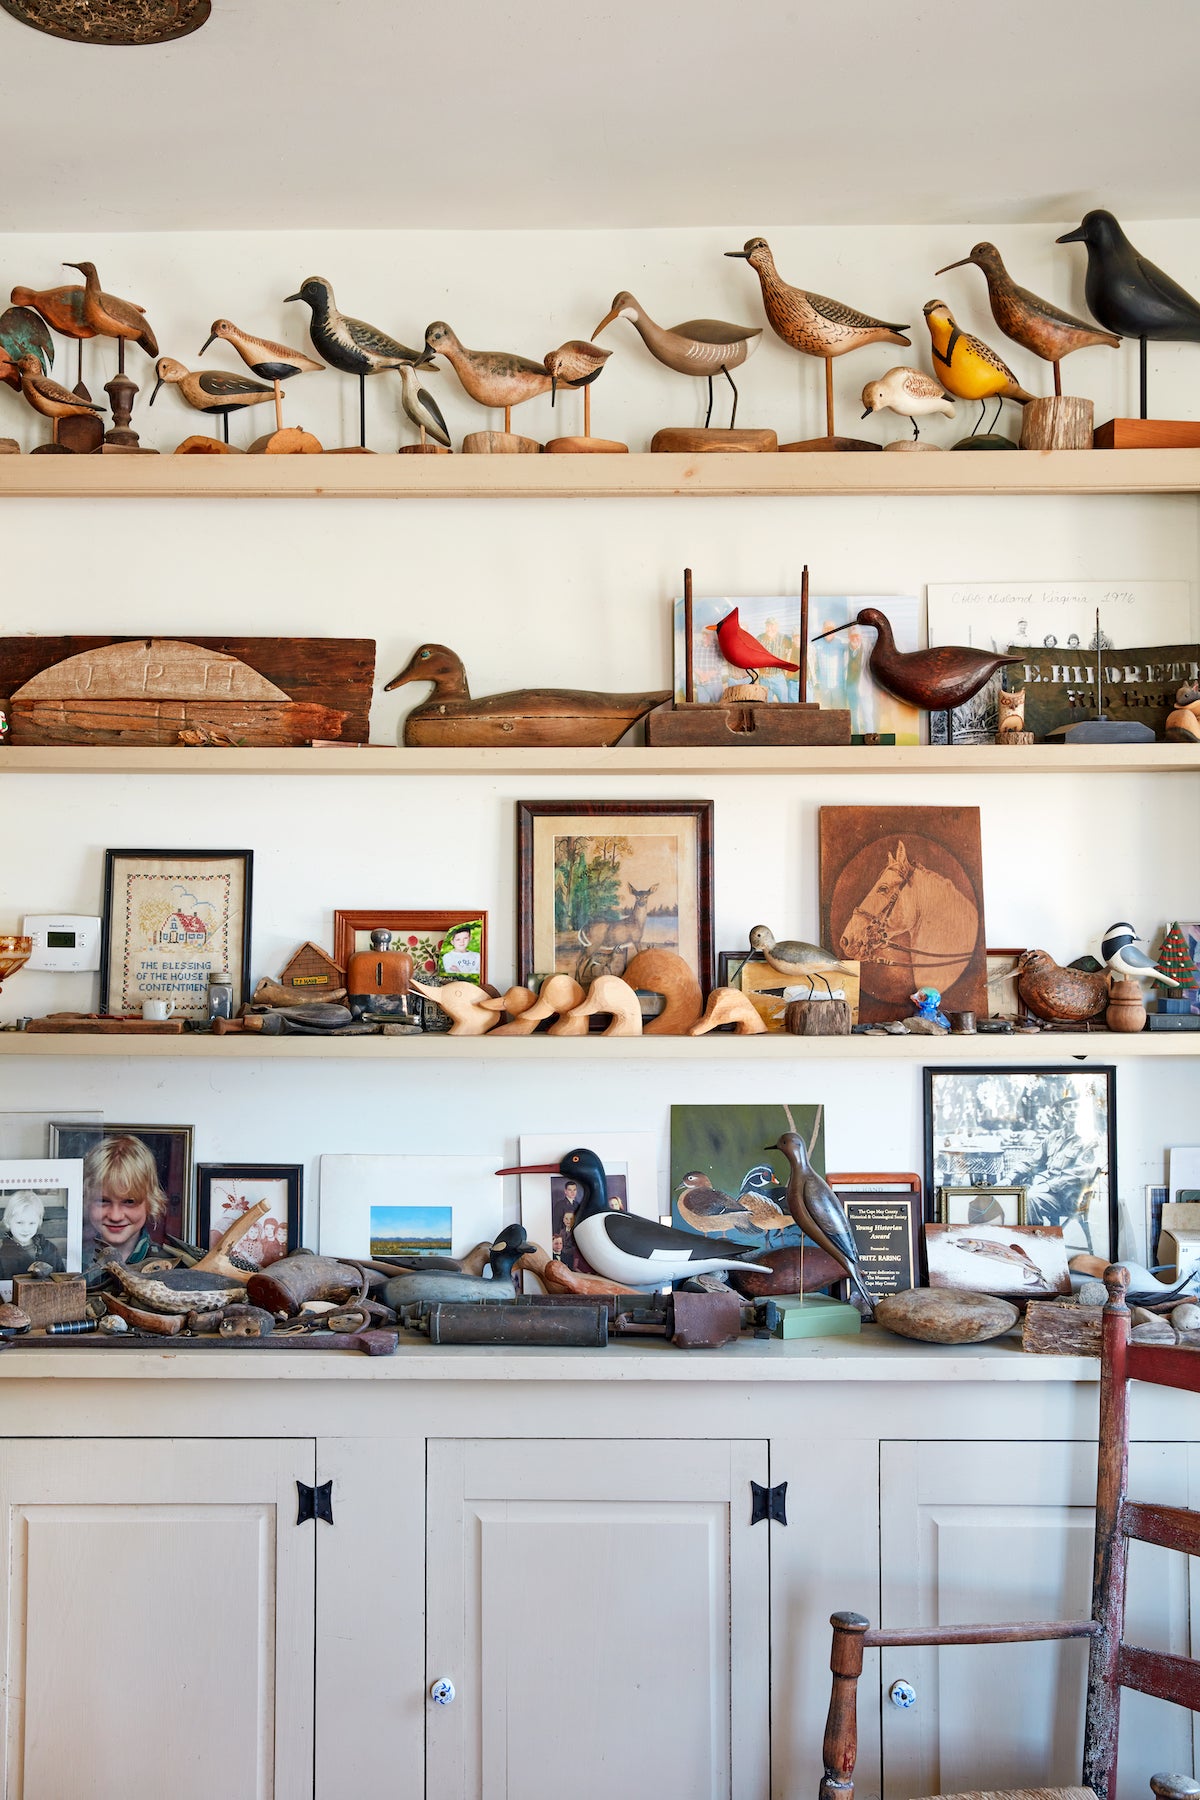 Shelves full of shorebird decoys and antiques.